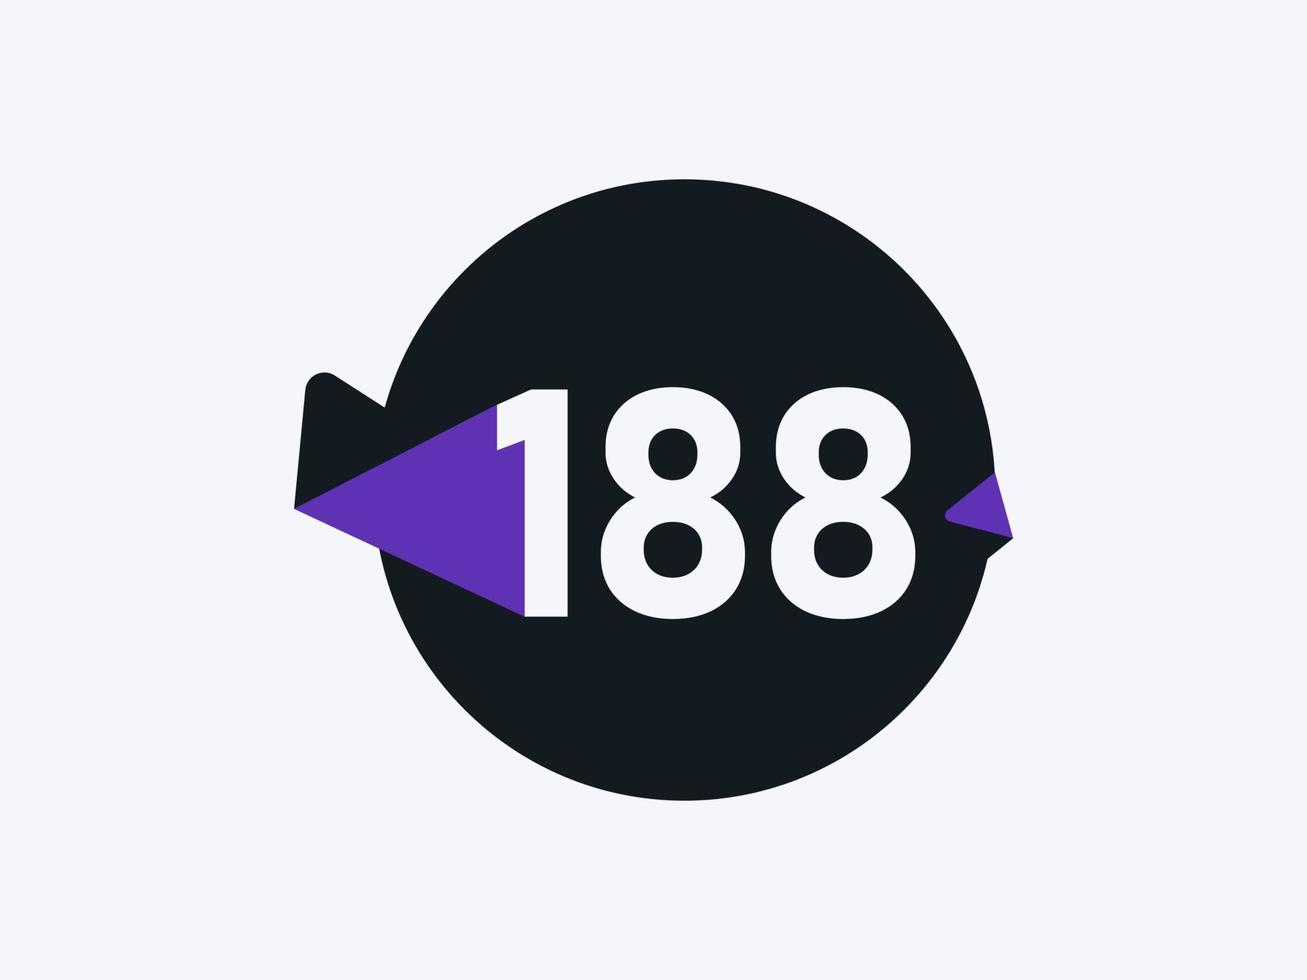 188 Number logo icon design vector image. Number logo icon design vector image